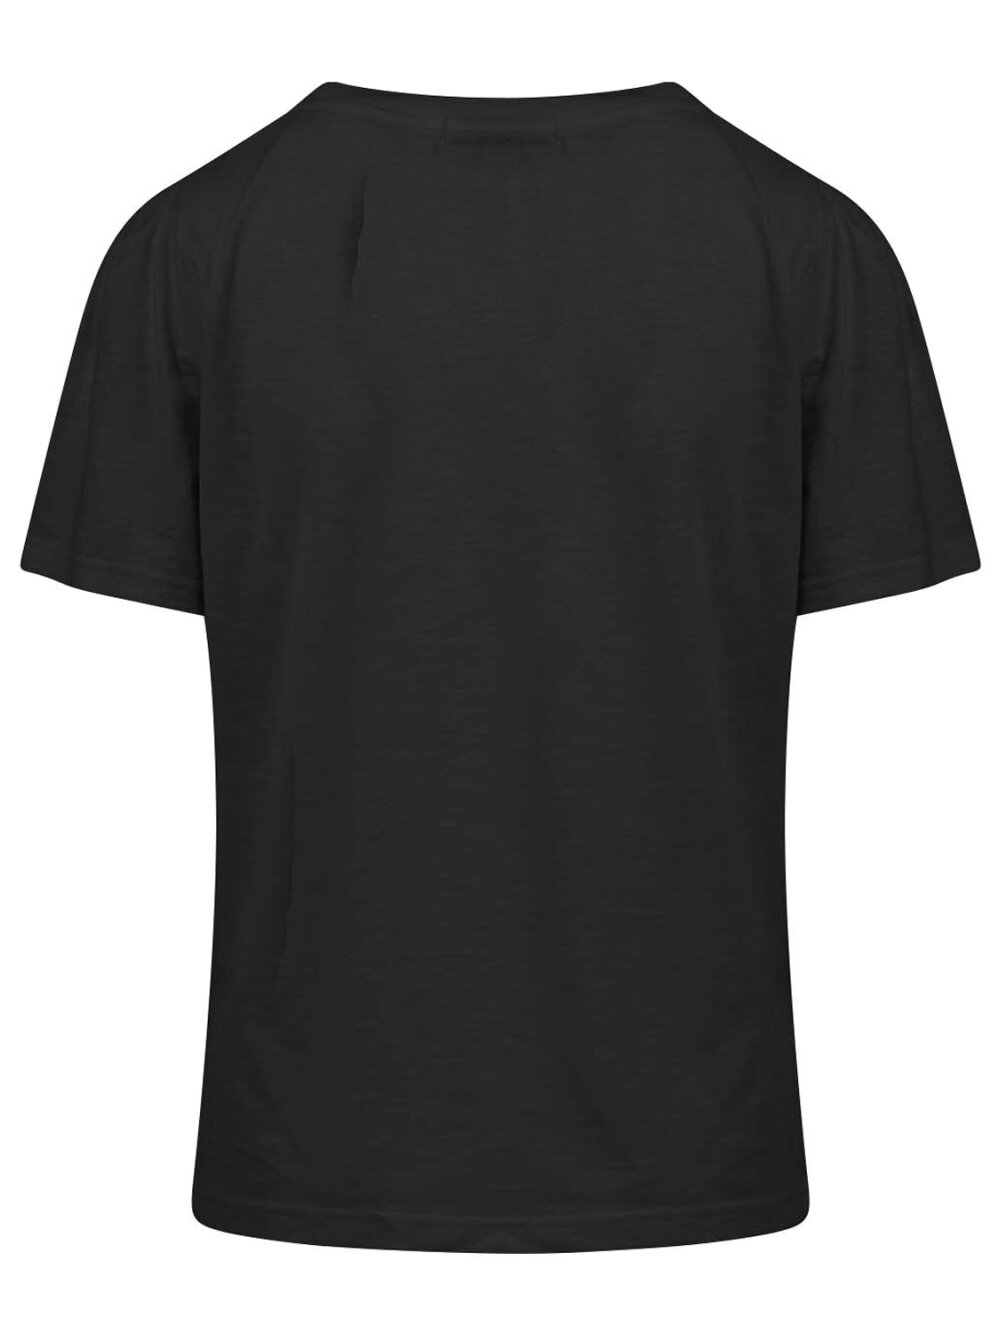 Coster Copenhagen - T-shirt with puff and round ne